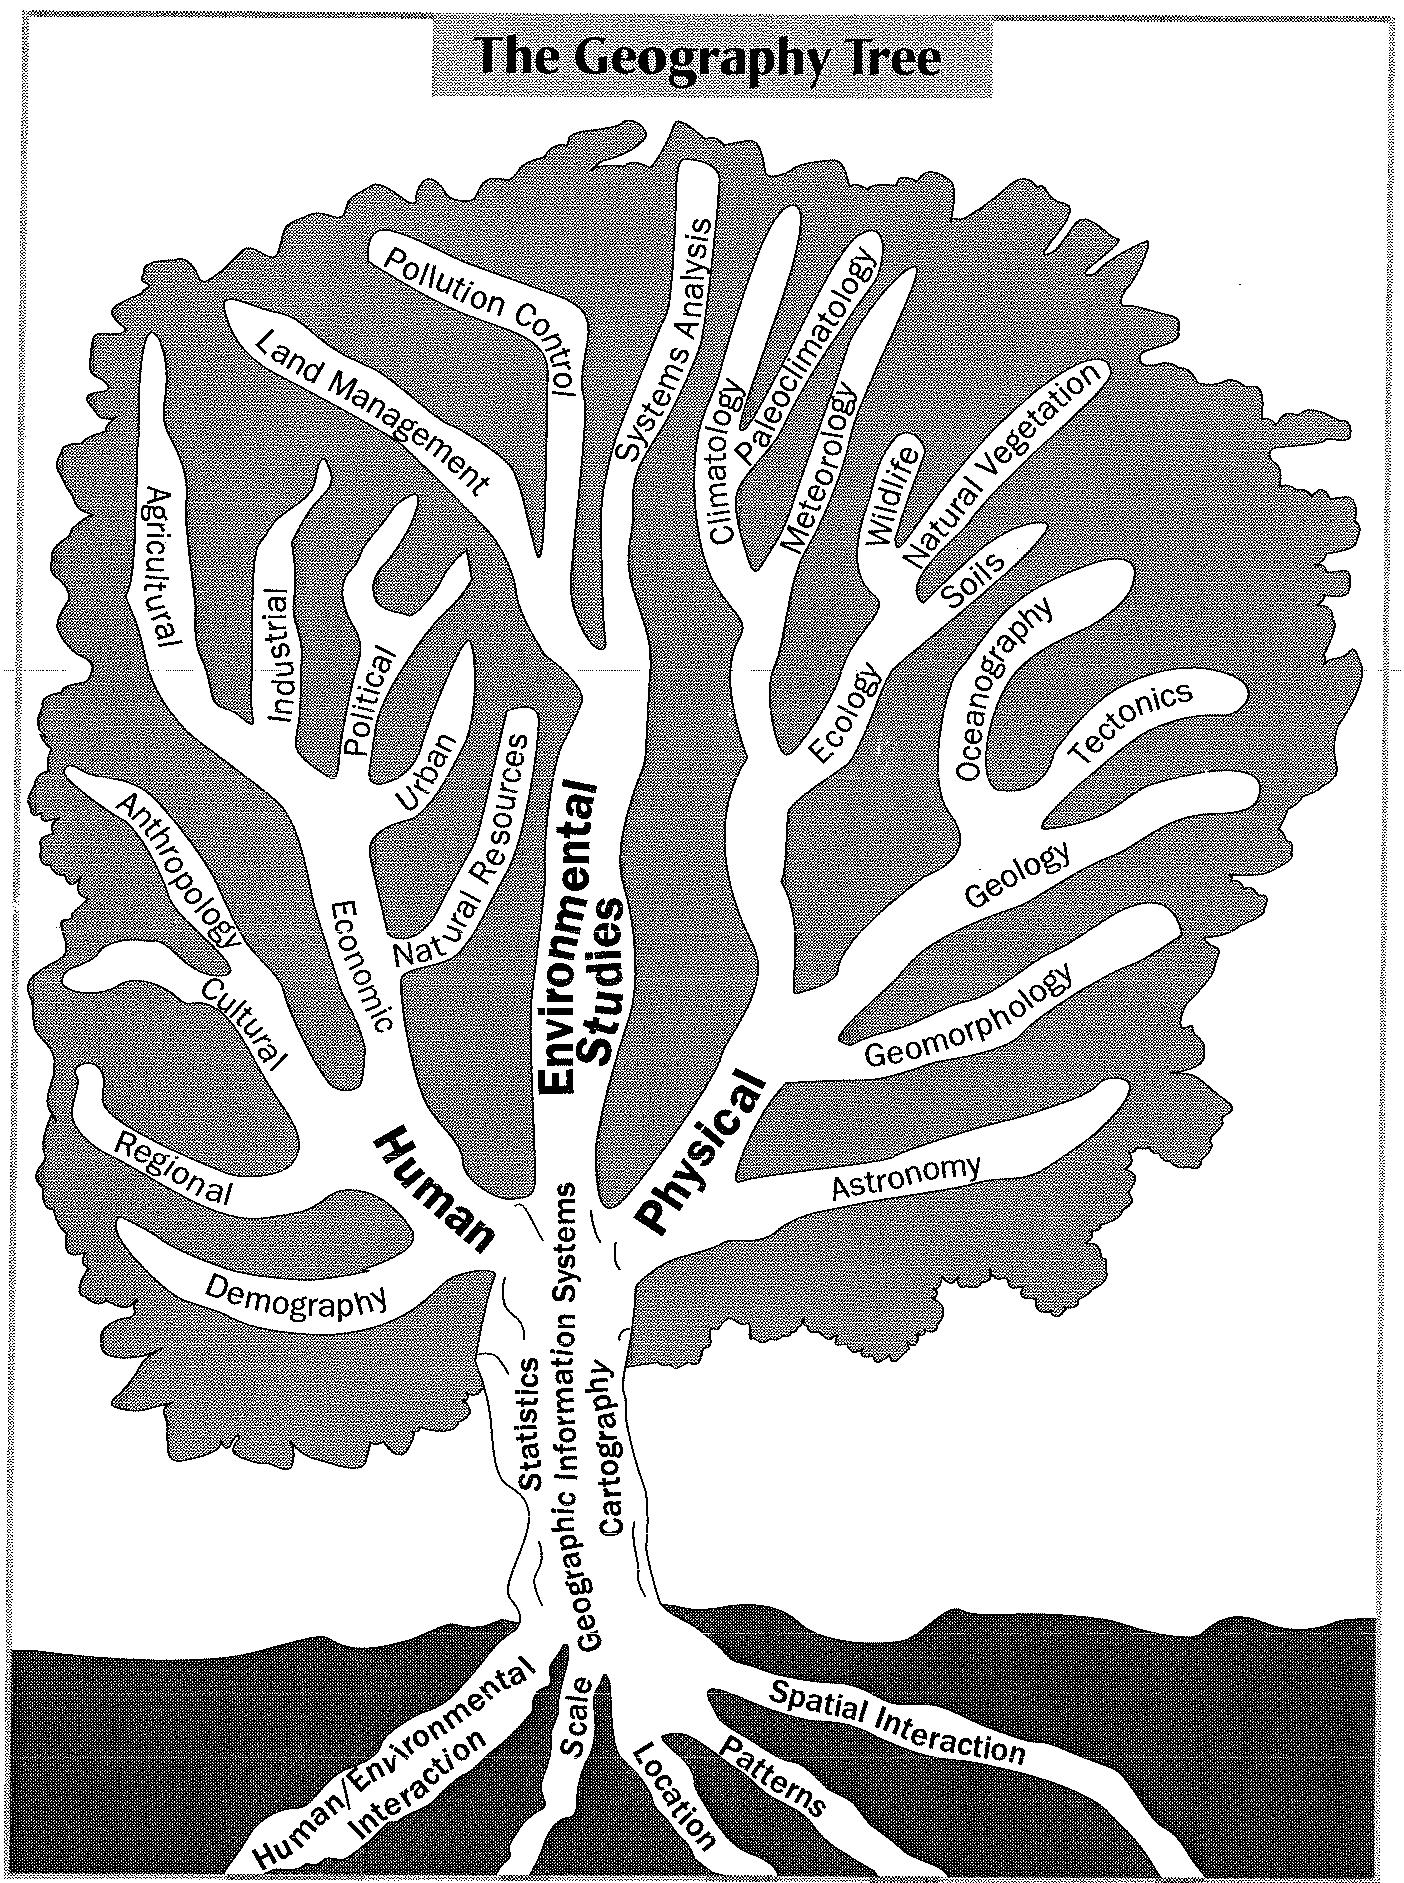 Geography Tree.JPG